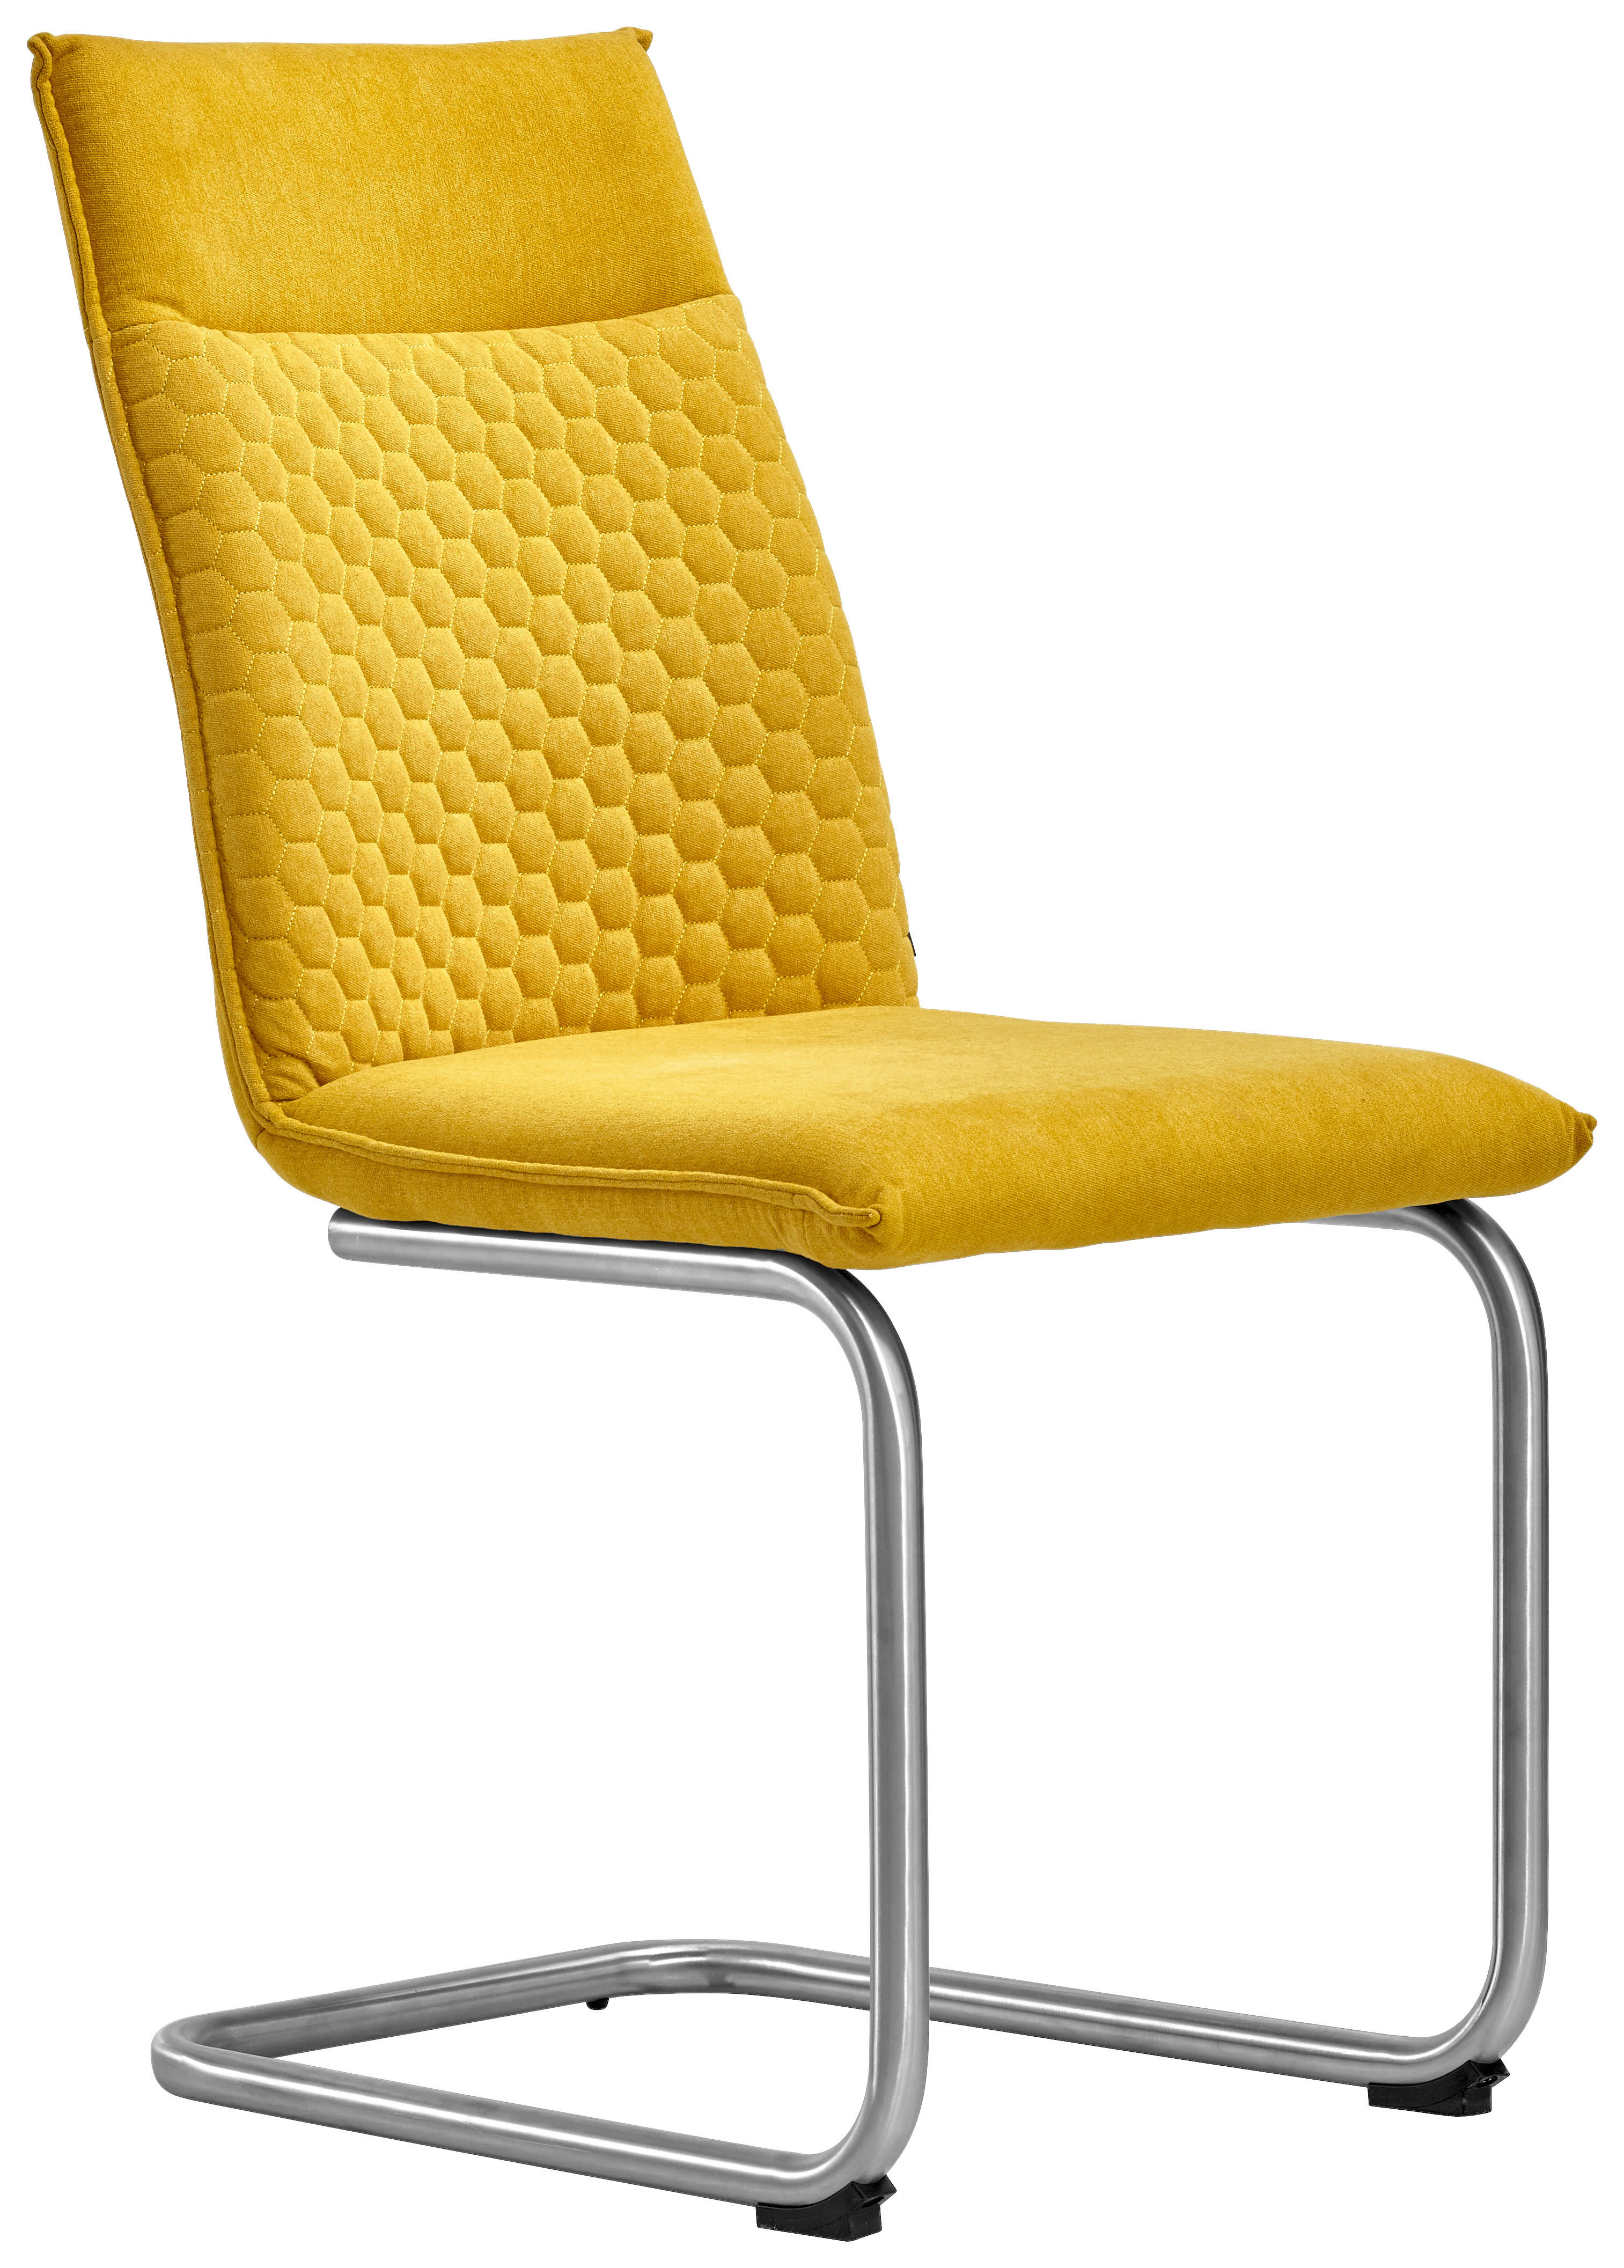 HOUPACÍ ŽIDLE, žlutá - žlutá/barvy nerez oceli, Design, kov/textil (47/92/59cm) - Xora